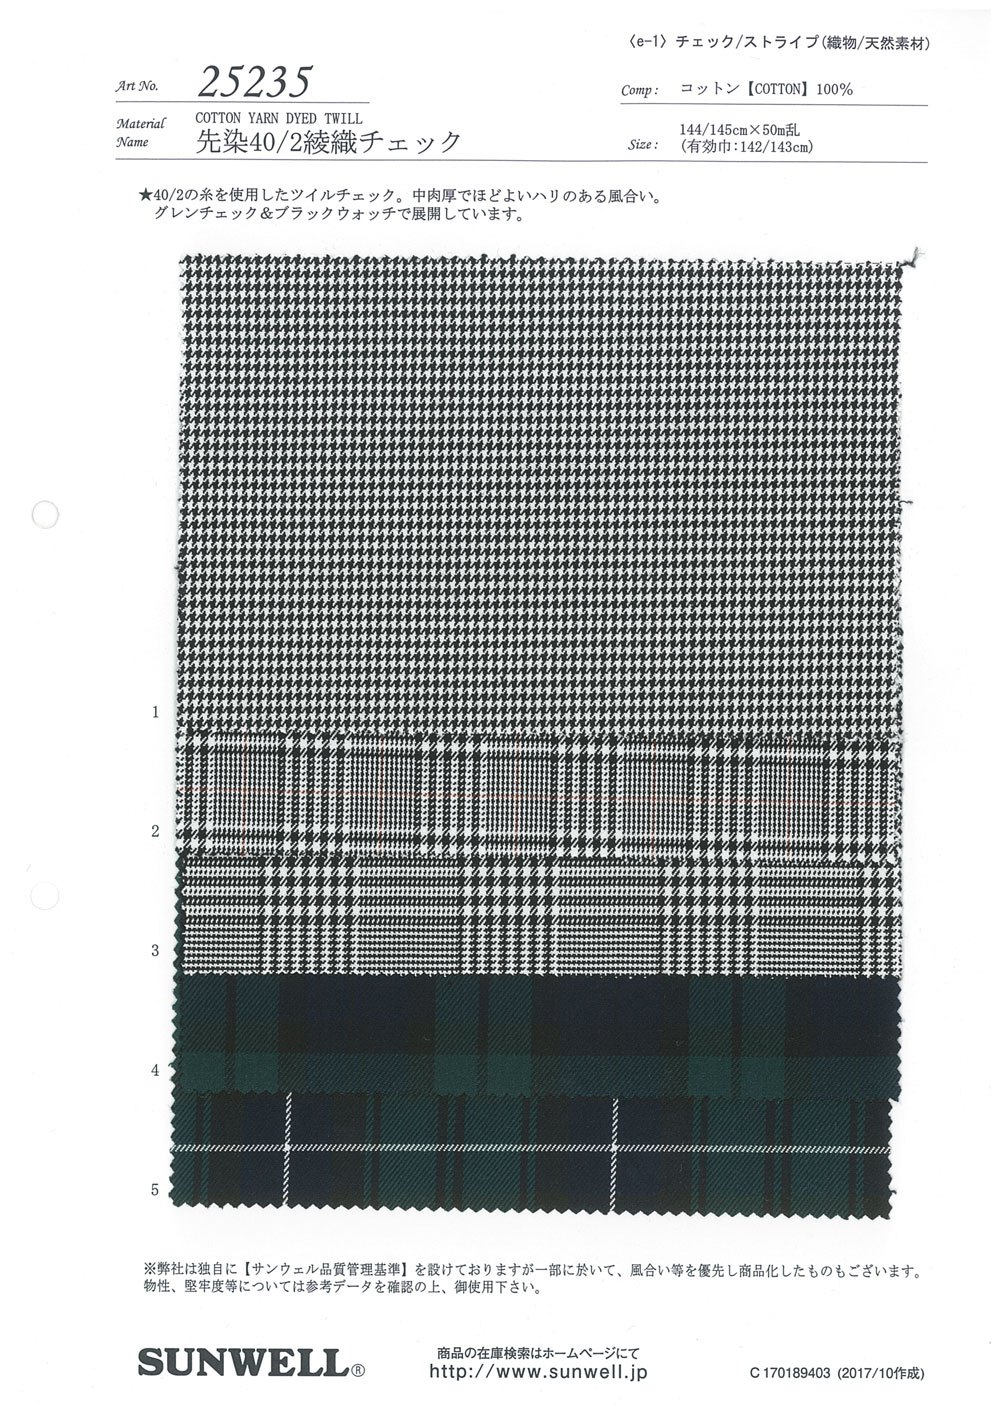 25235 [Fabrica Textil] SUNWELL